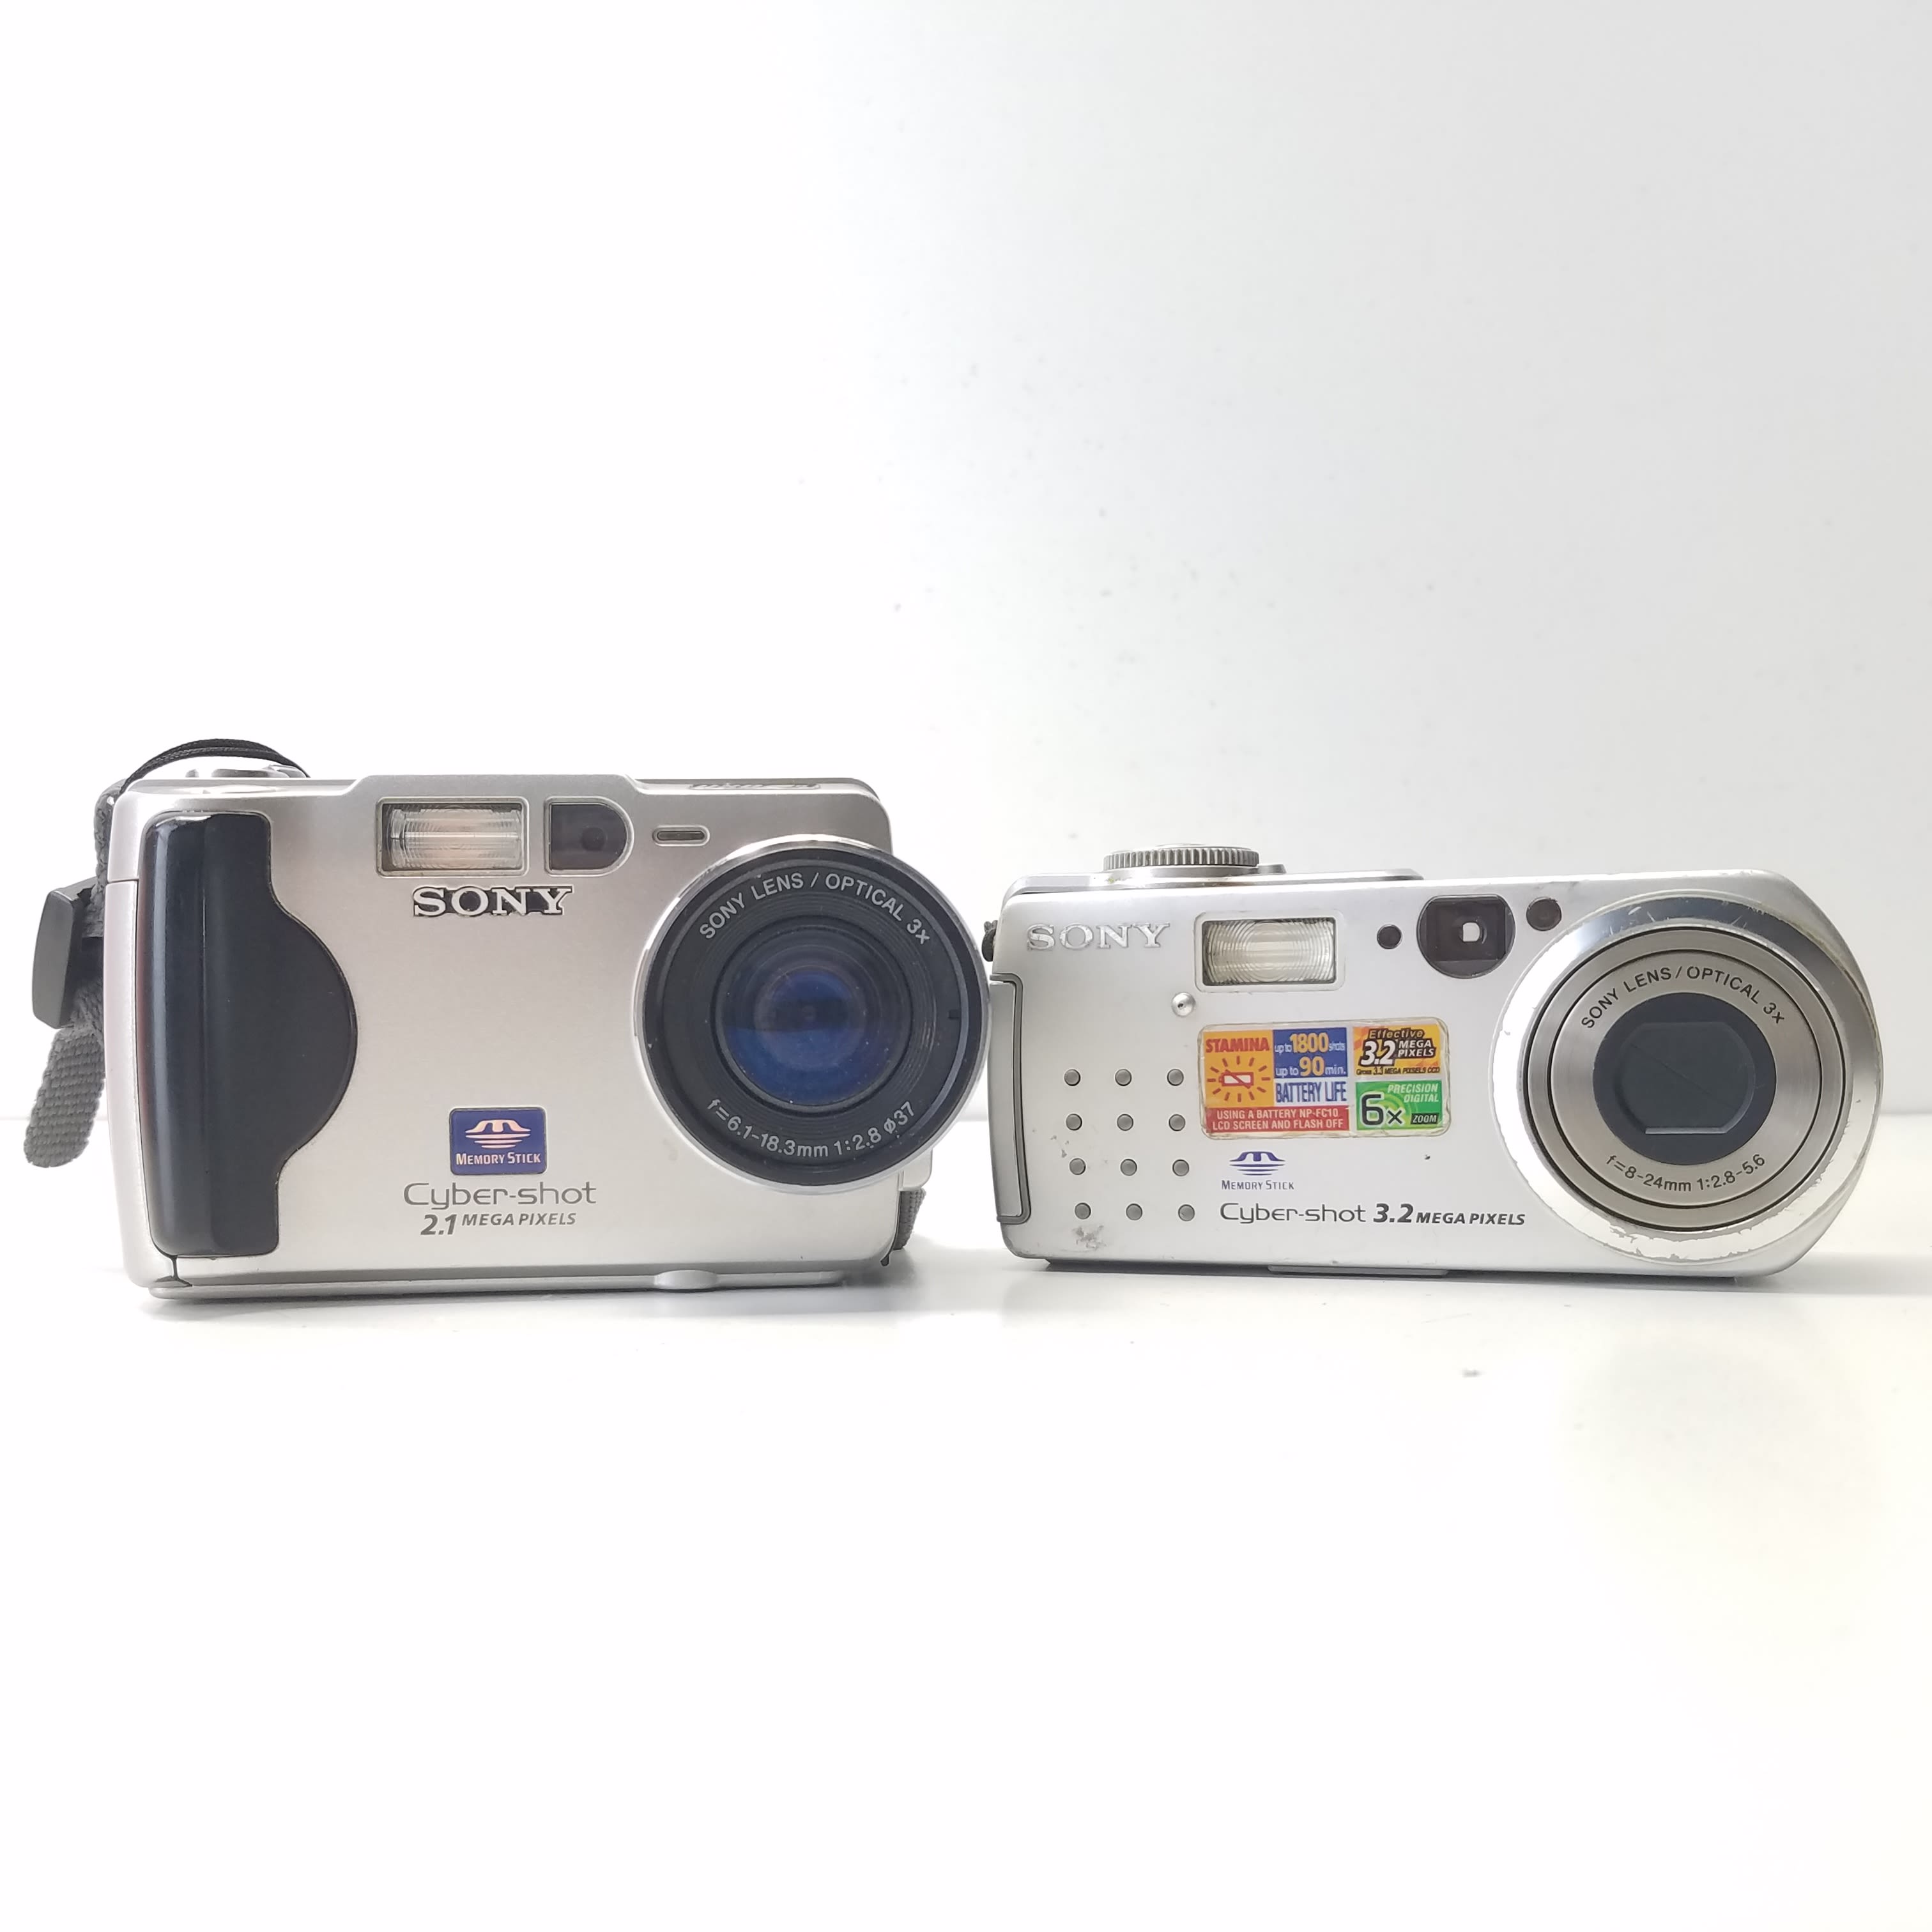 Buy the Lot of 2 Assorted Sony Cyber-shot Digital Still Cameras